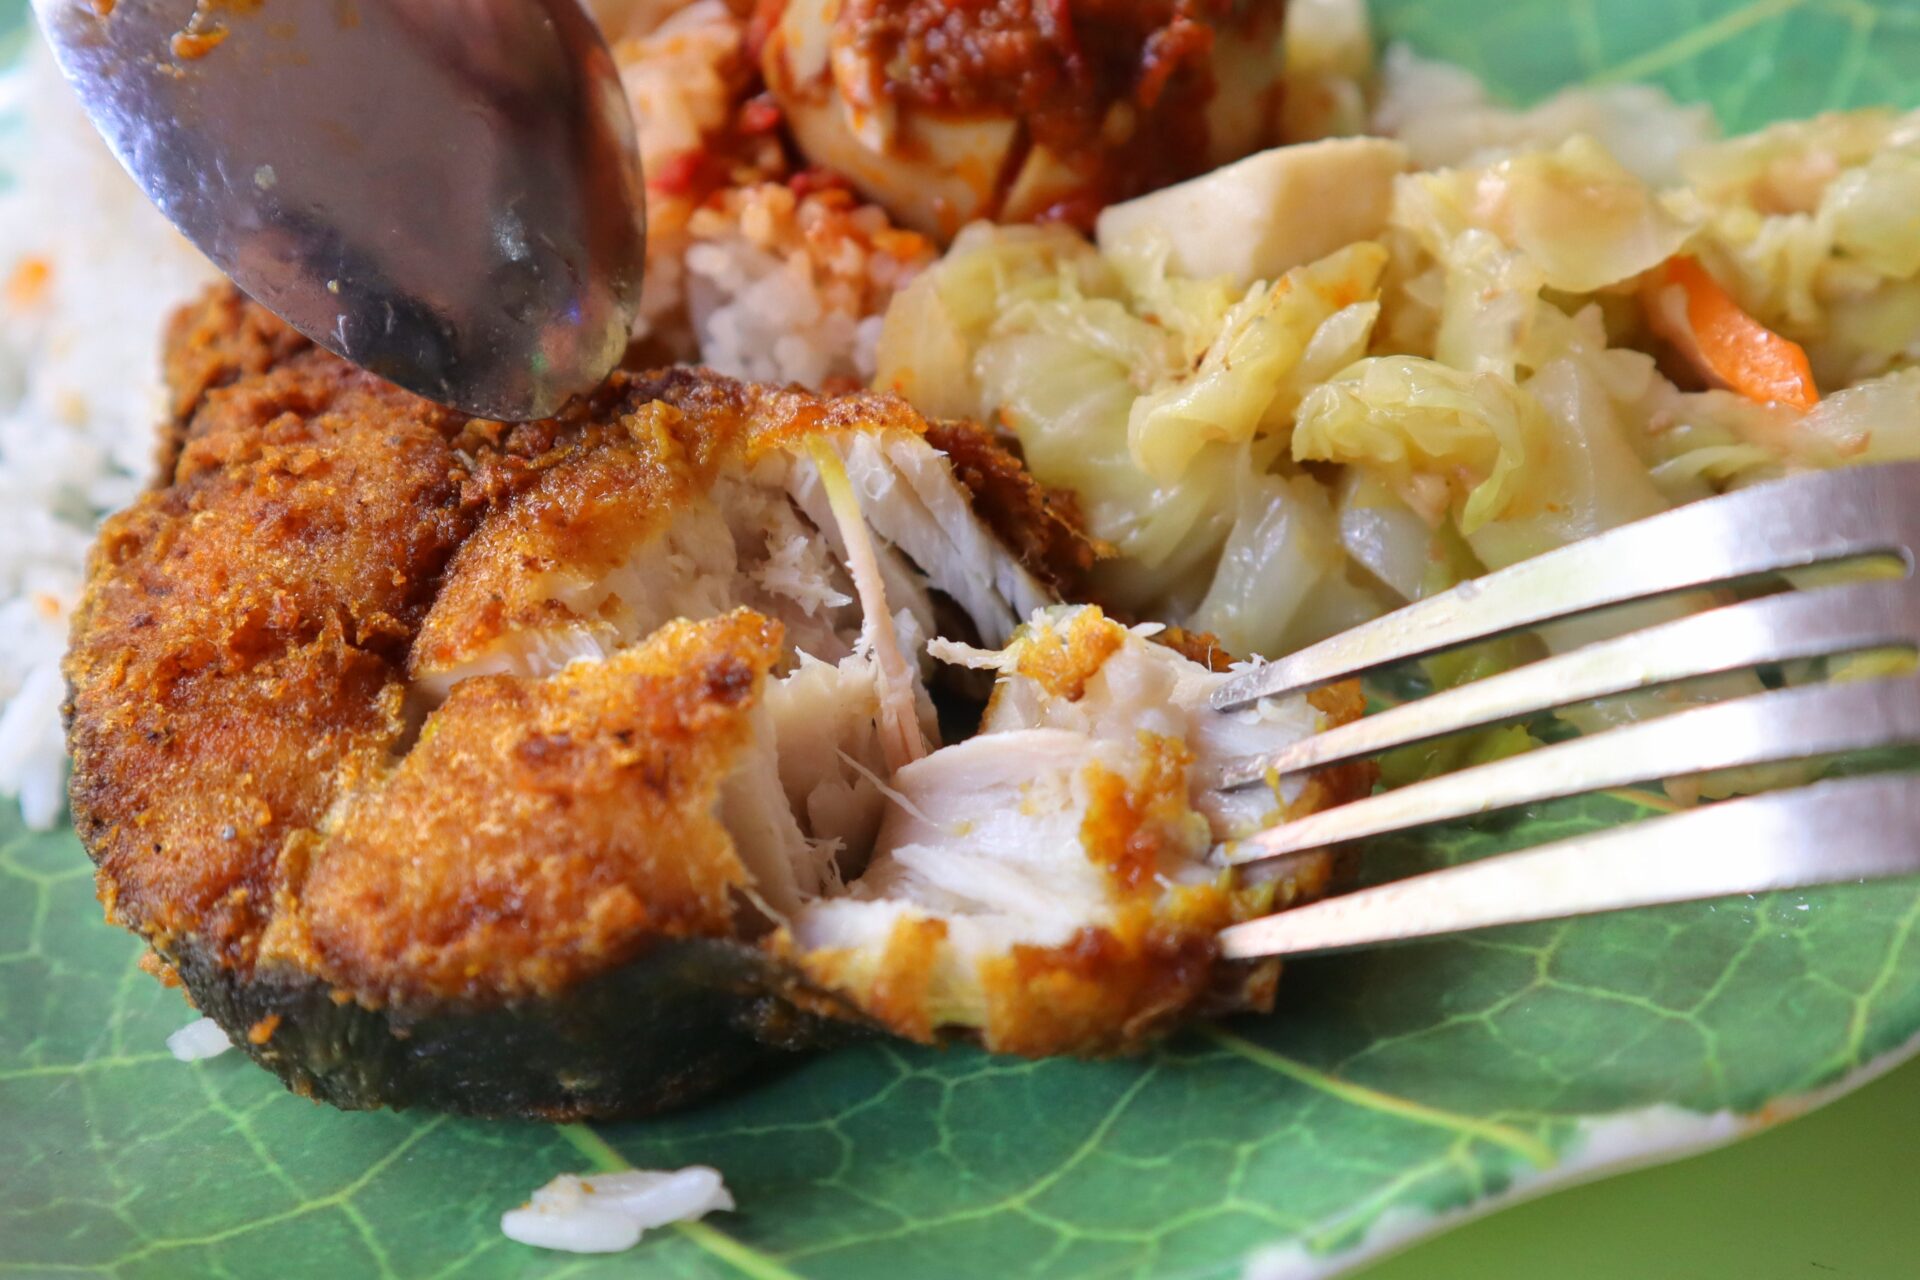 anthony indonesian cuisine - ikan goreng insides